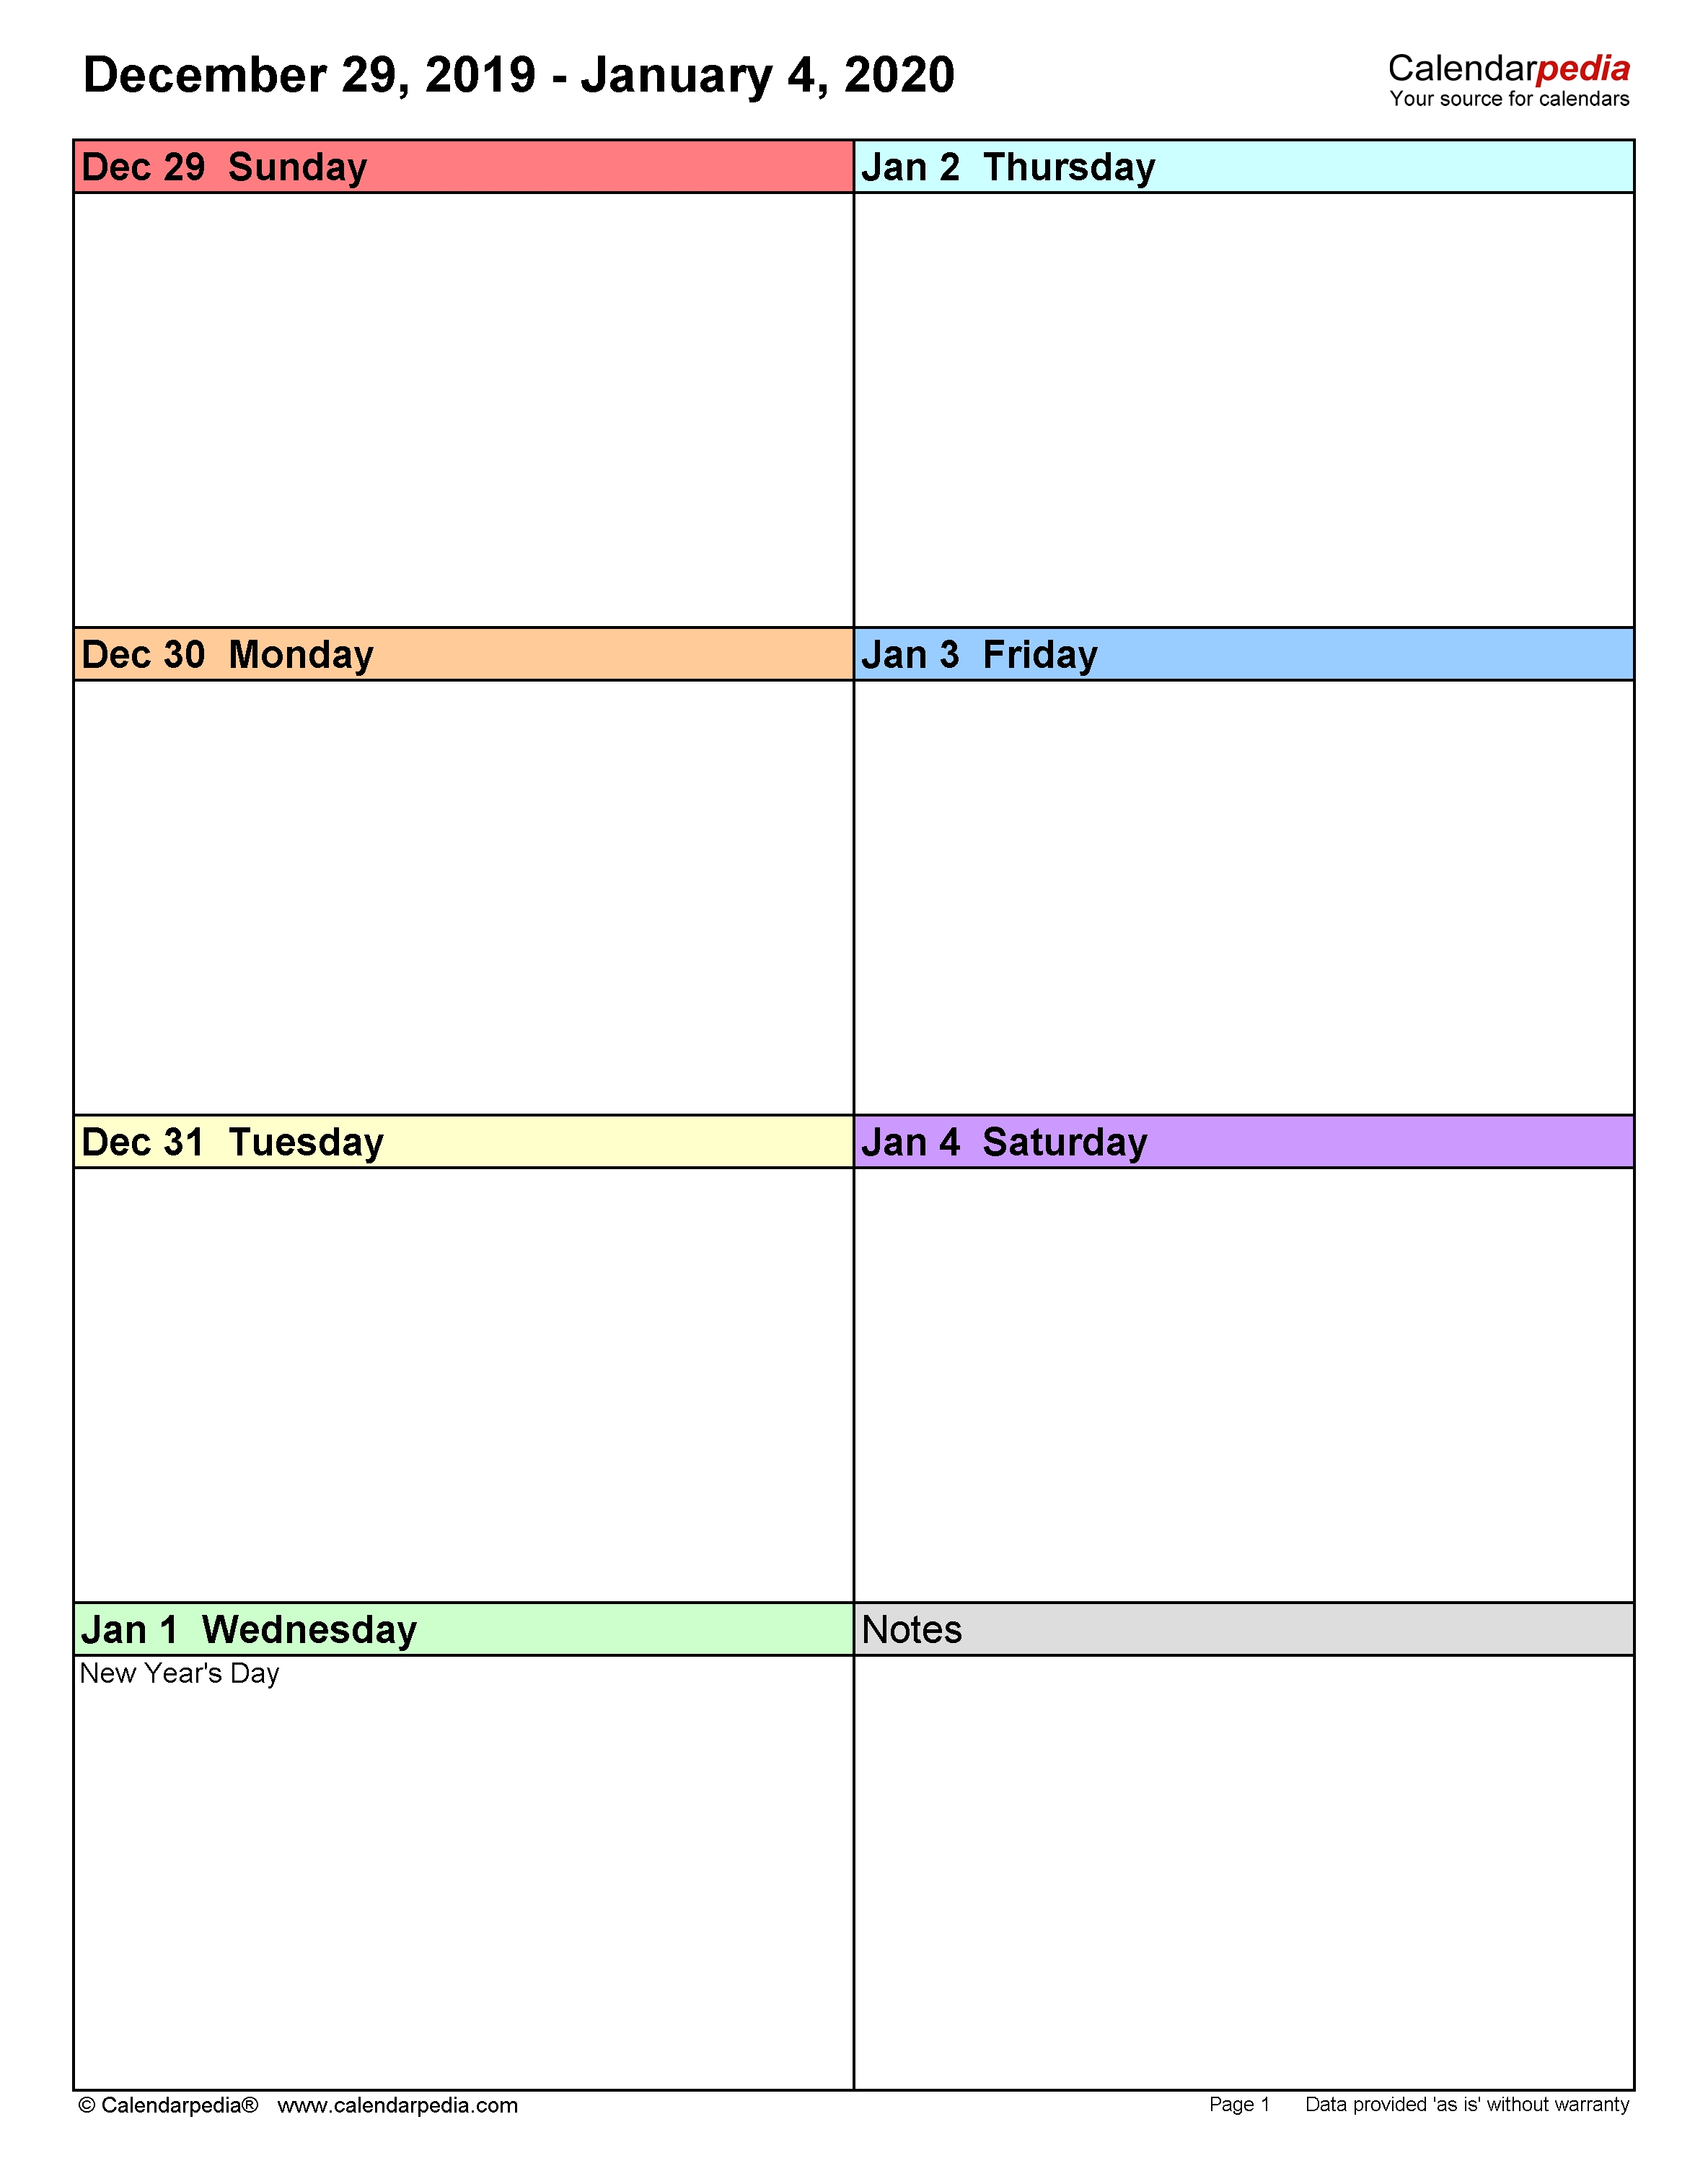 Weekly Calendars 2020 For Word - 12 Free Printable Templates Calendar Template One Week